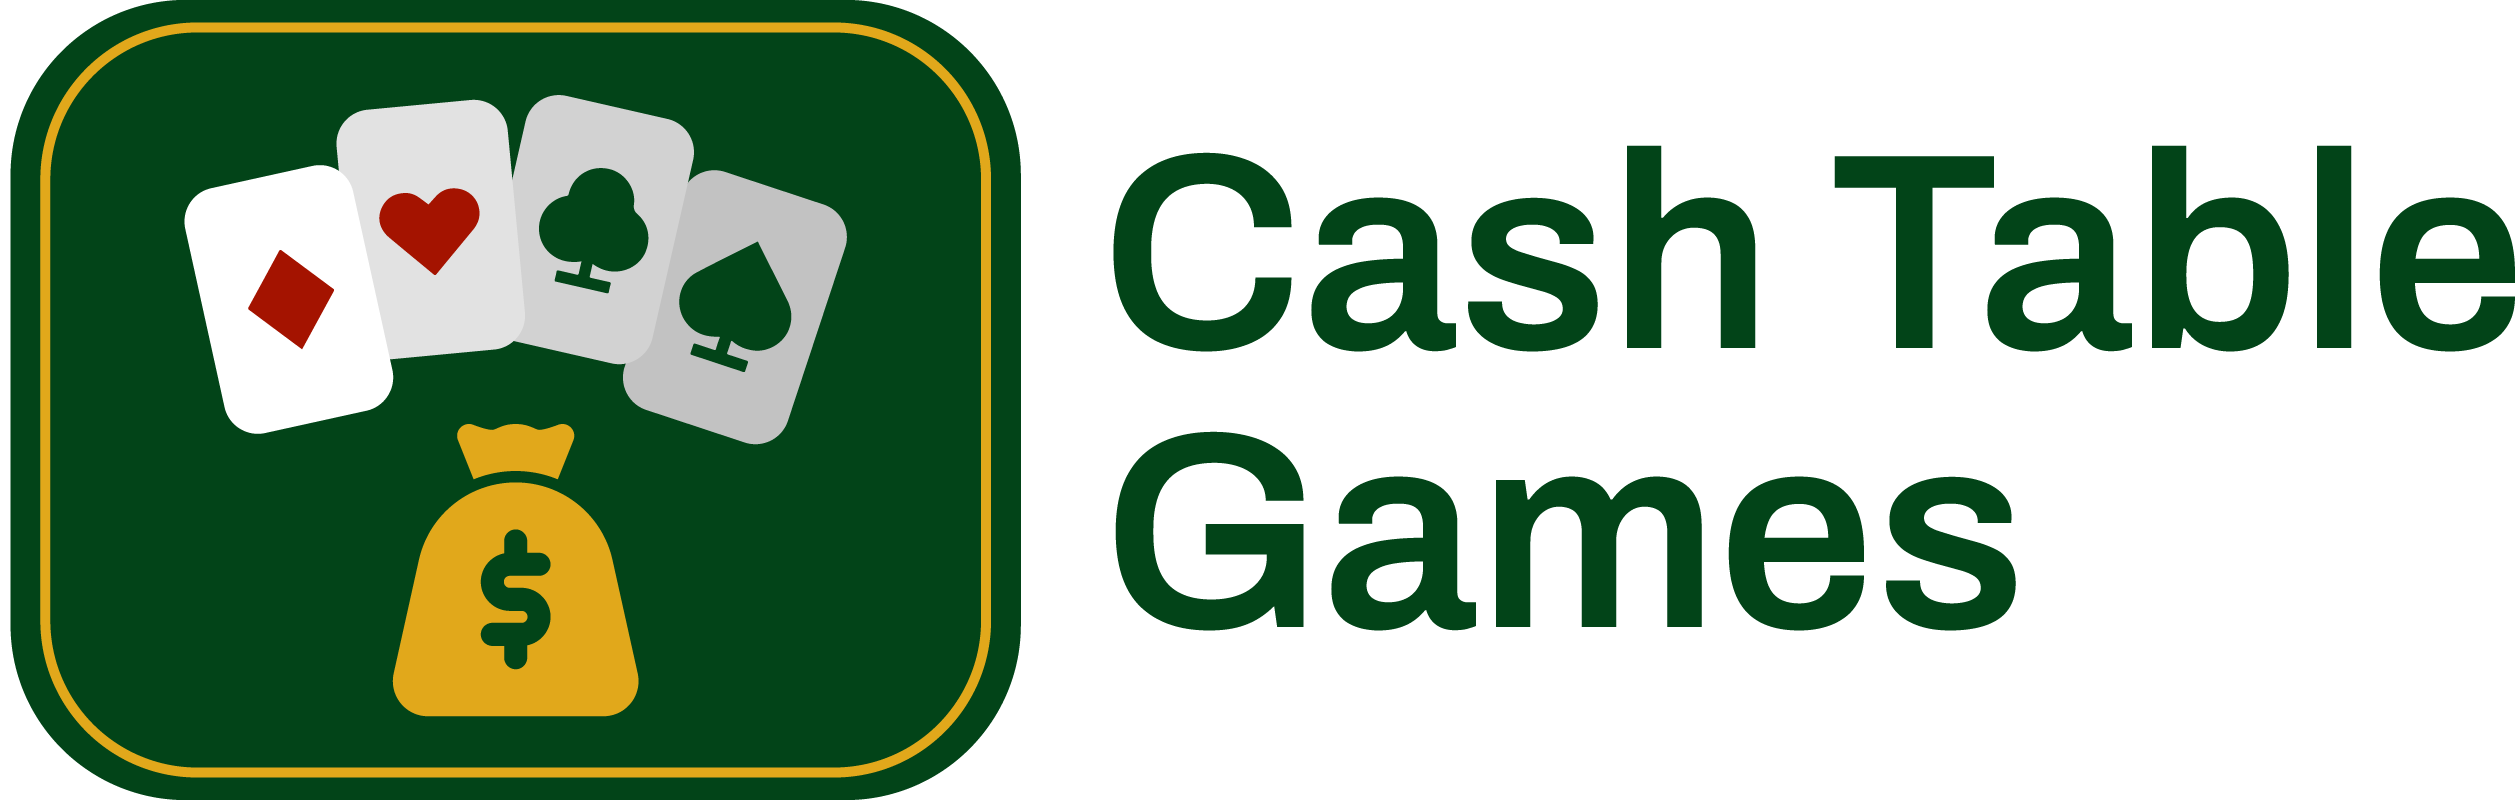 Cash Table Games